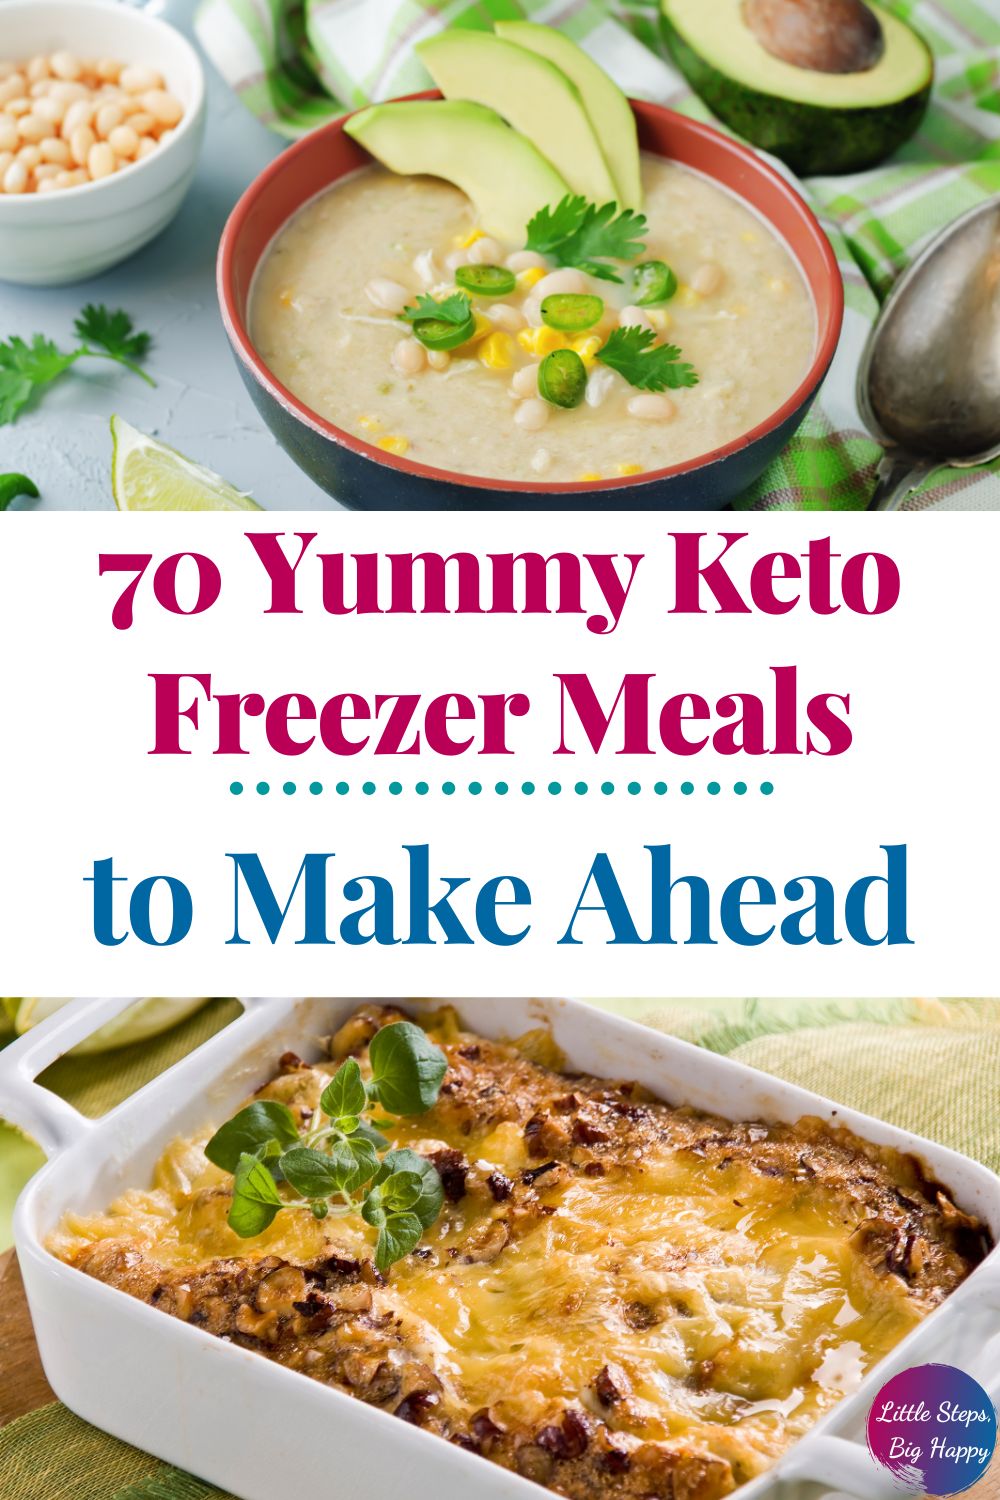 70 Yummy Keto Freezer Meals to Make Ahead